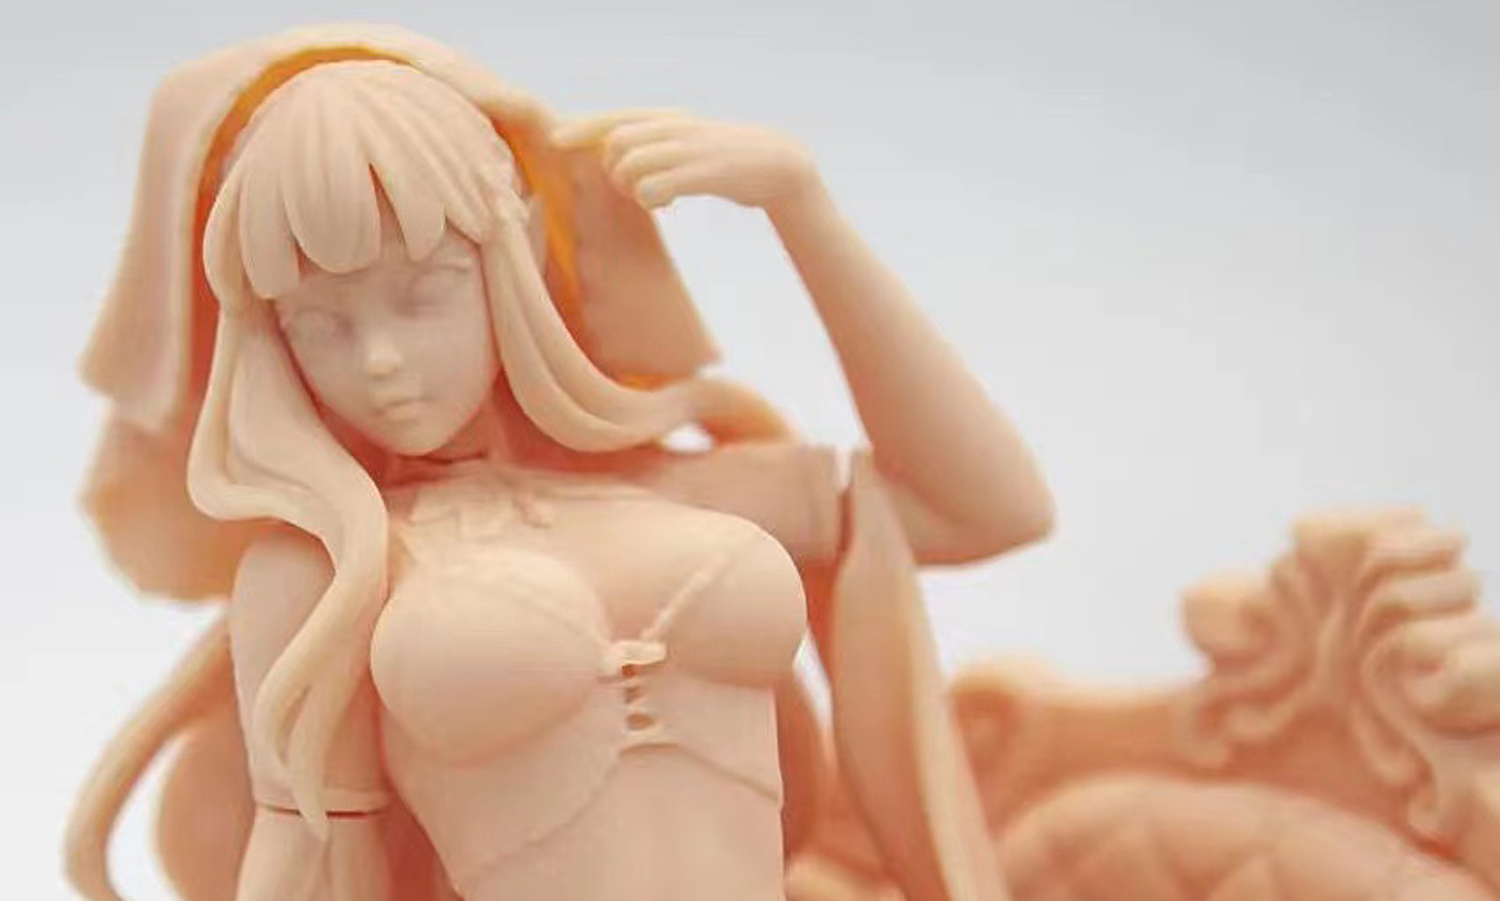 Custom Wholesale Pvc Japan Hot Toys New Action 3D Printing Anime Figure  Girl  Online Shopping